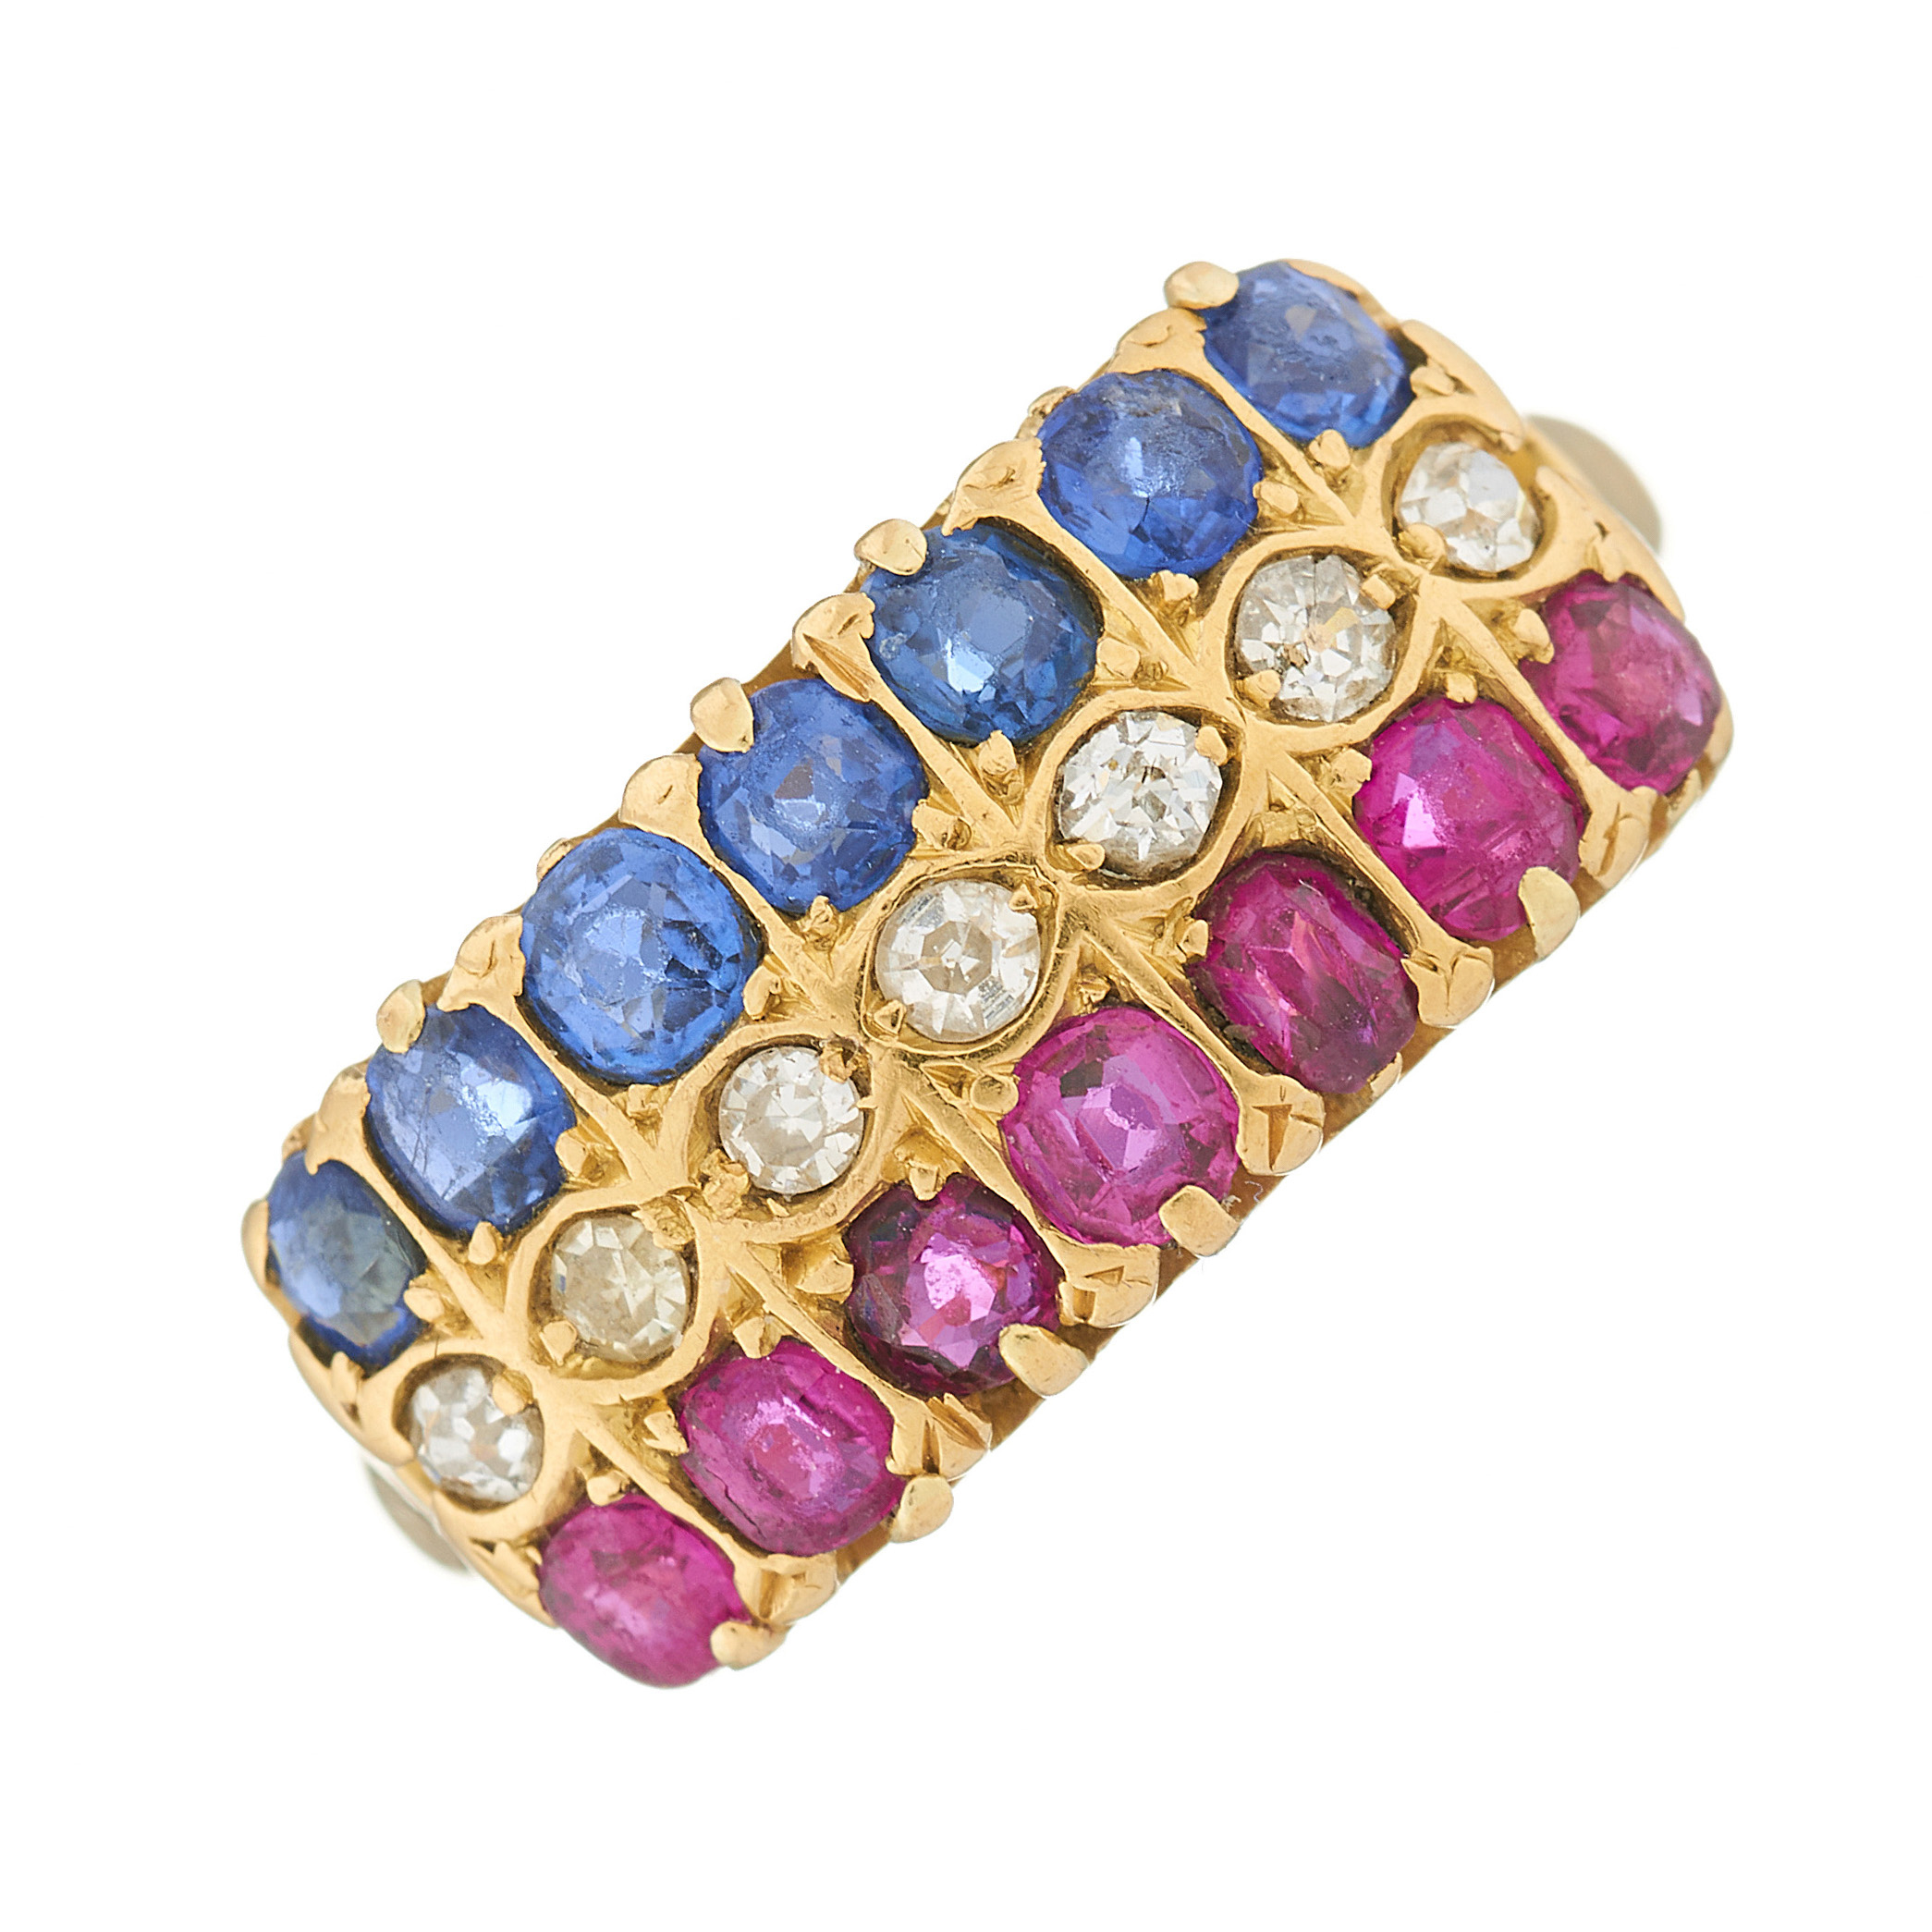 An Edwardian 18ct gold ruby, sapphire and diamond three-row dress ring